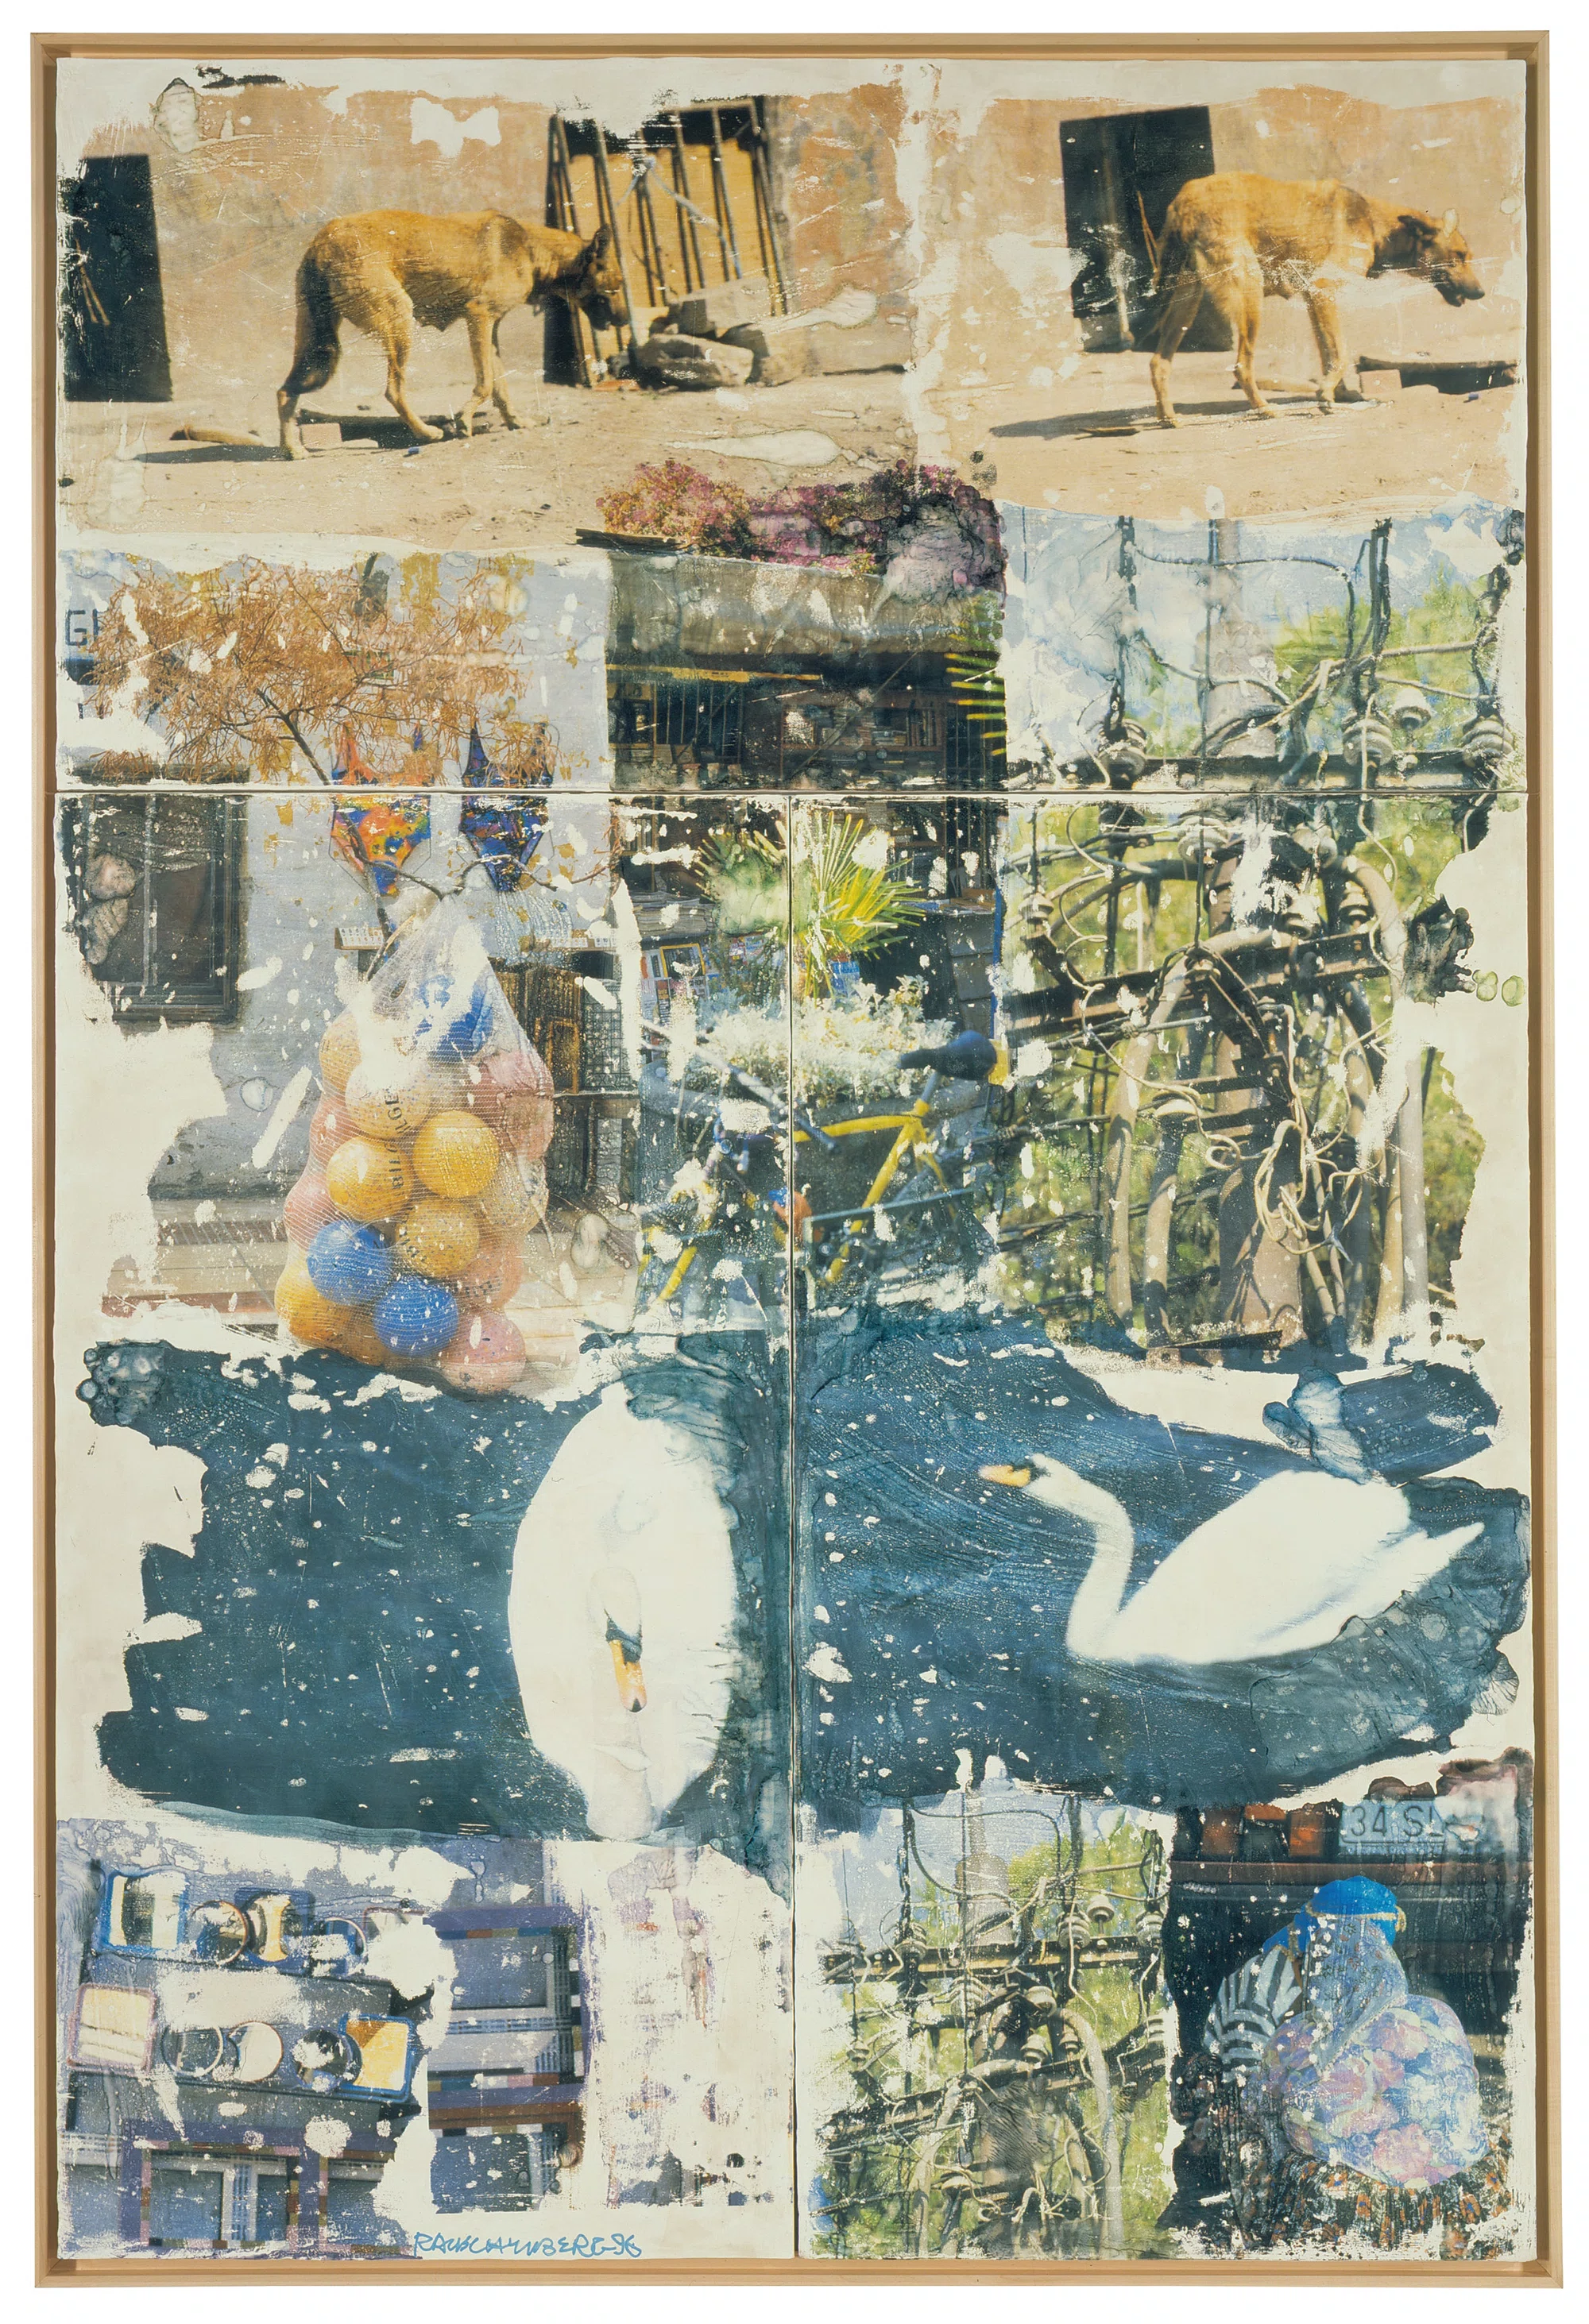 Lot - Josh Smith, (b. 1976), Turtle, 2019, Oil on panel, 48 H x 36 W